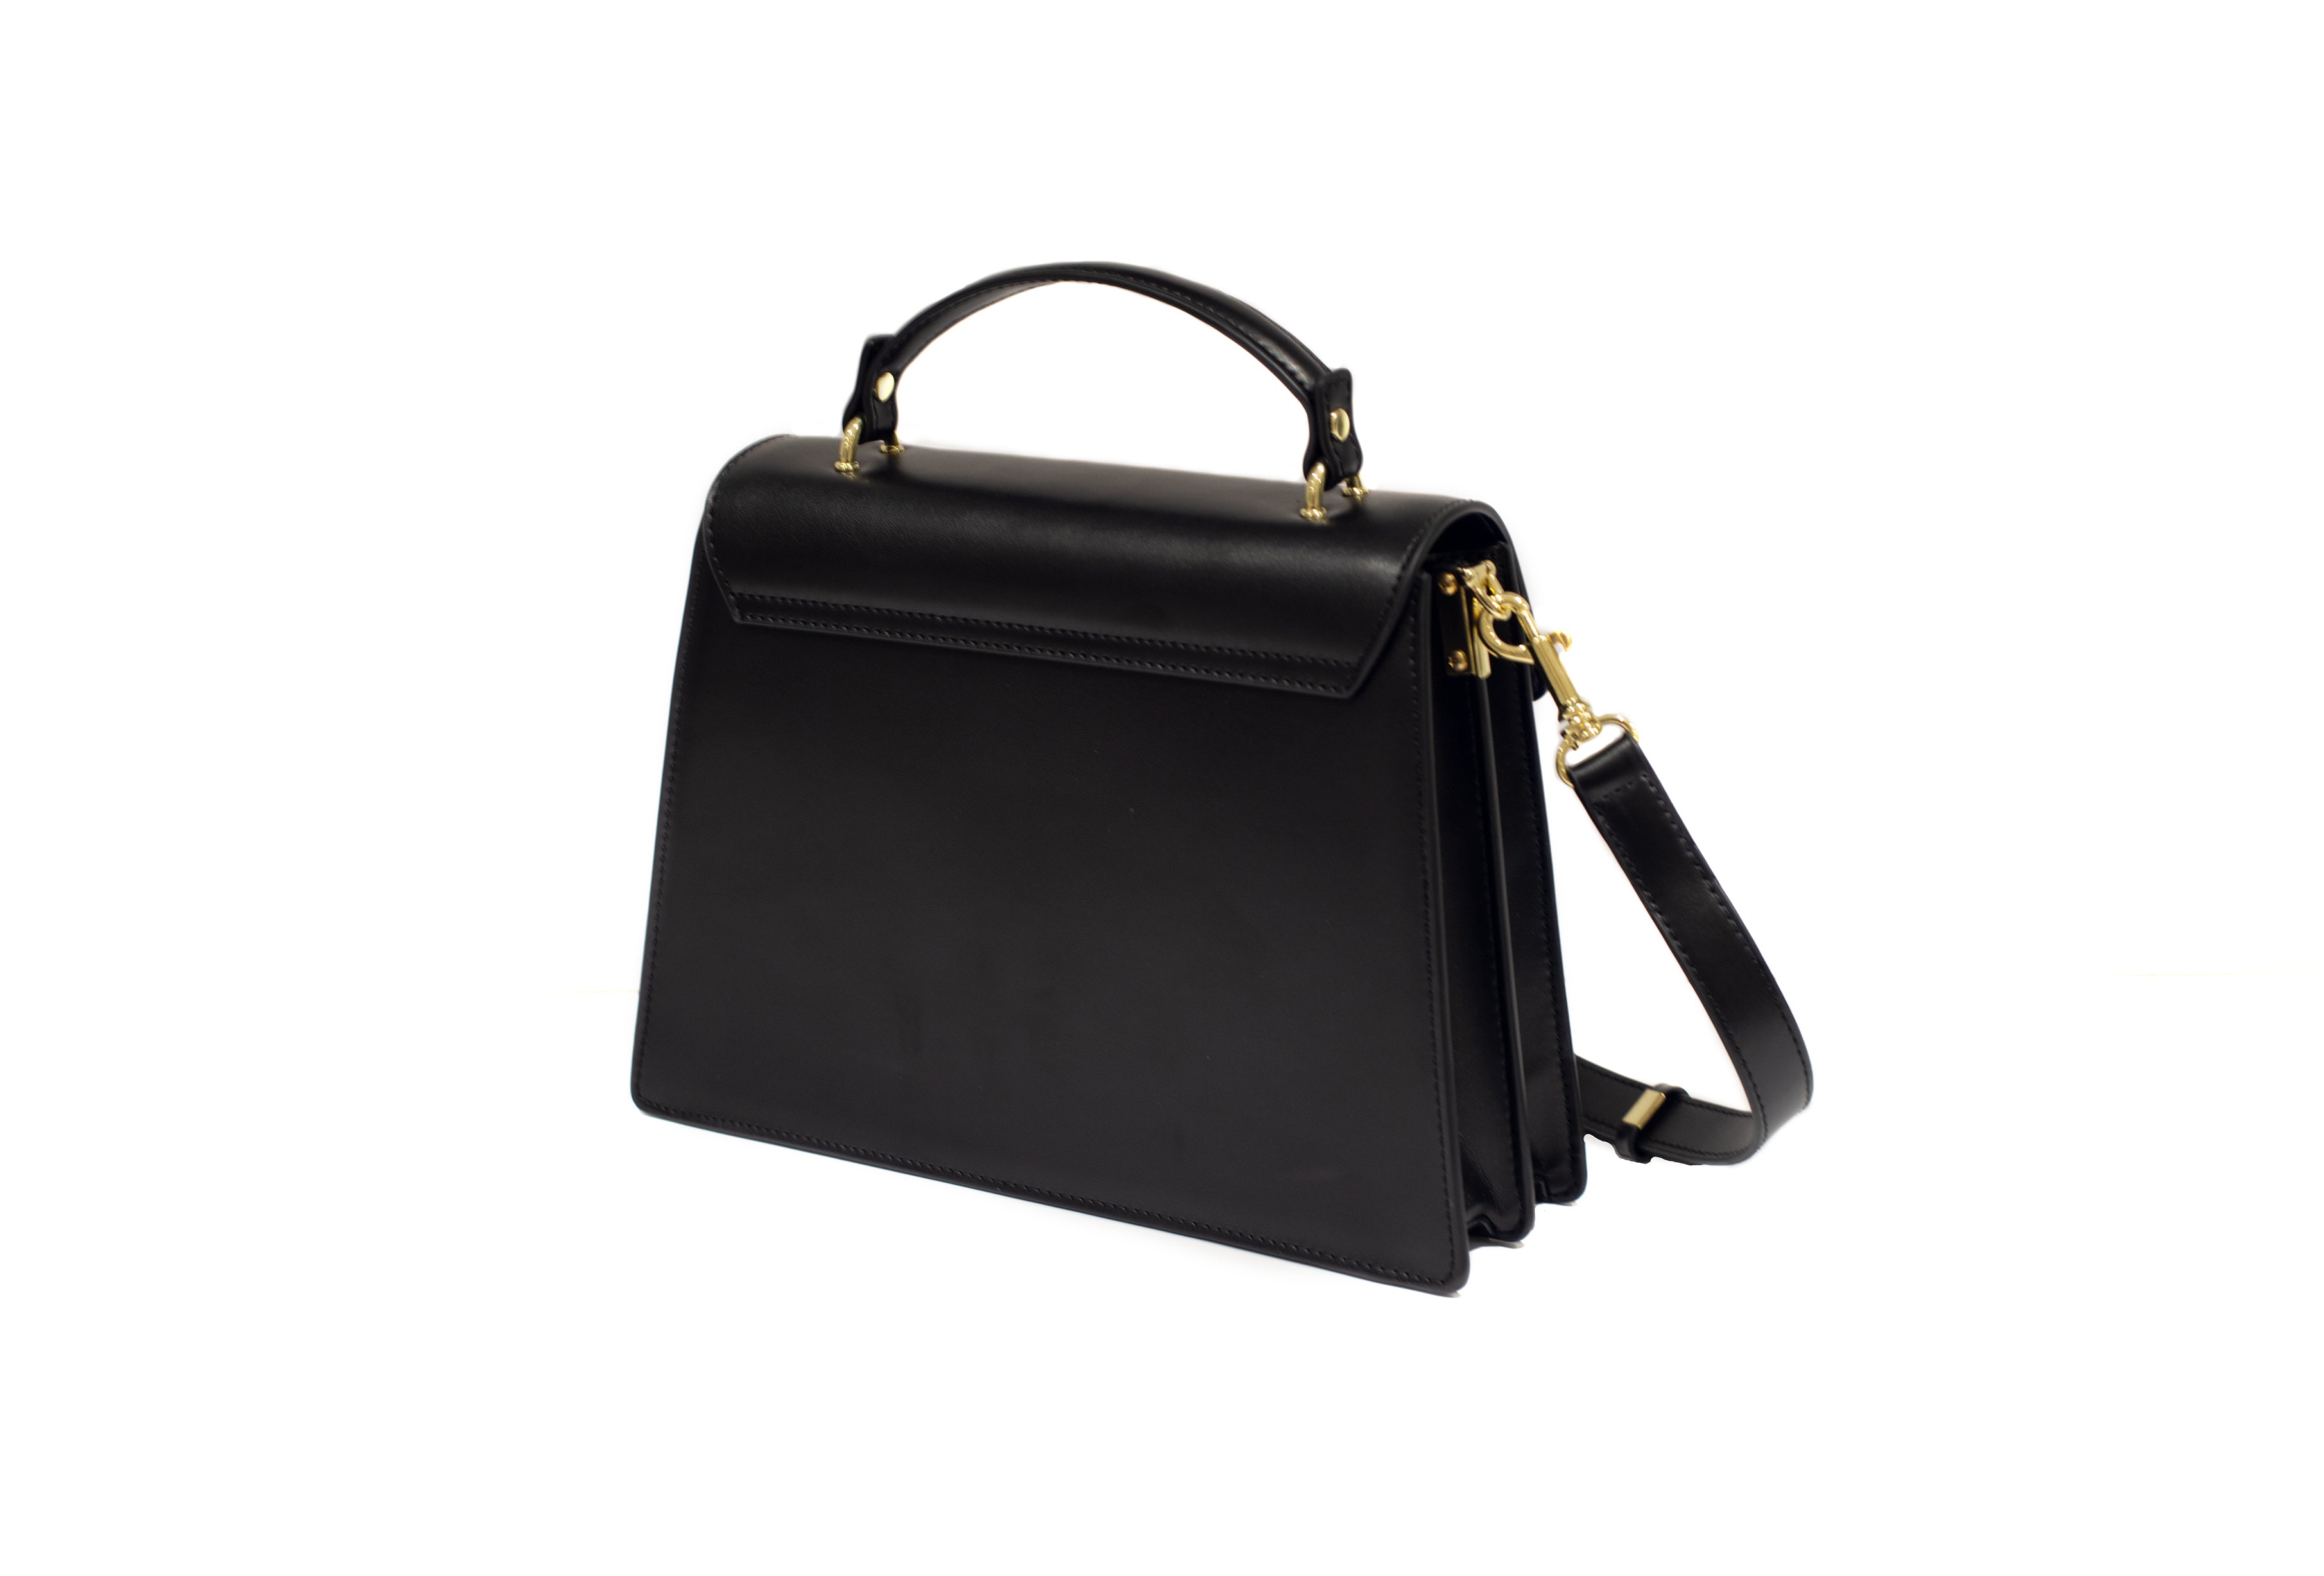 Amelia Hunt: Black classic handbag